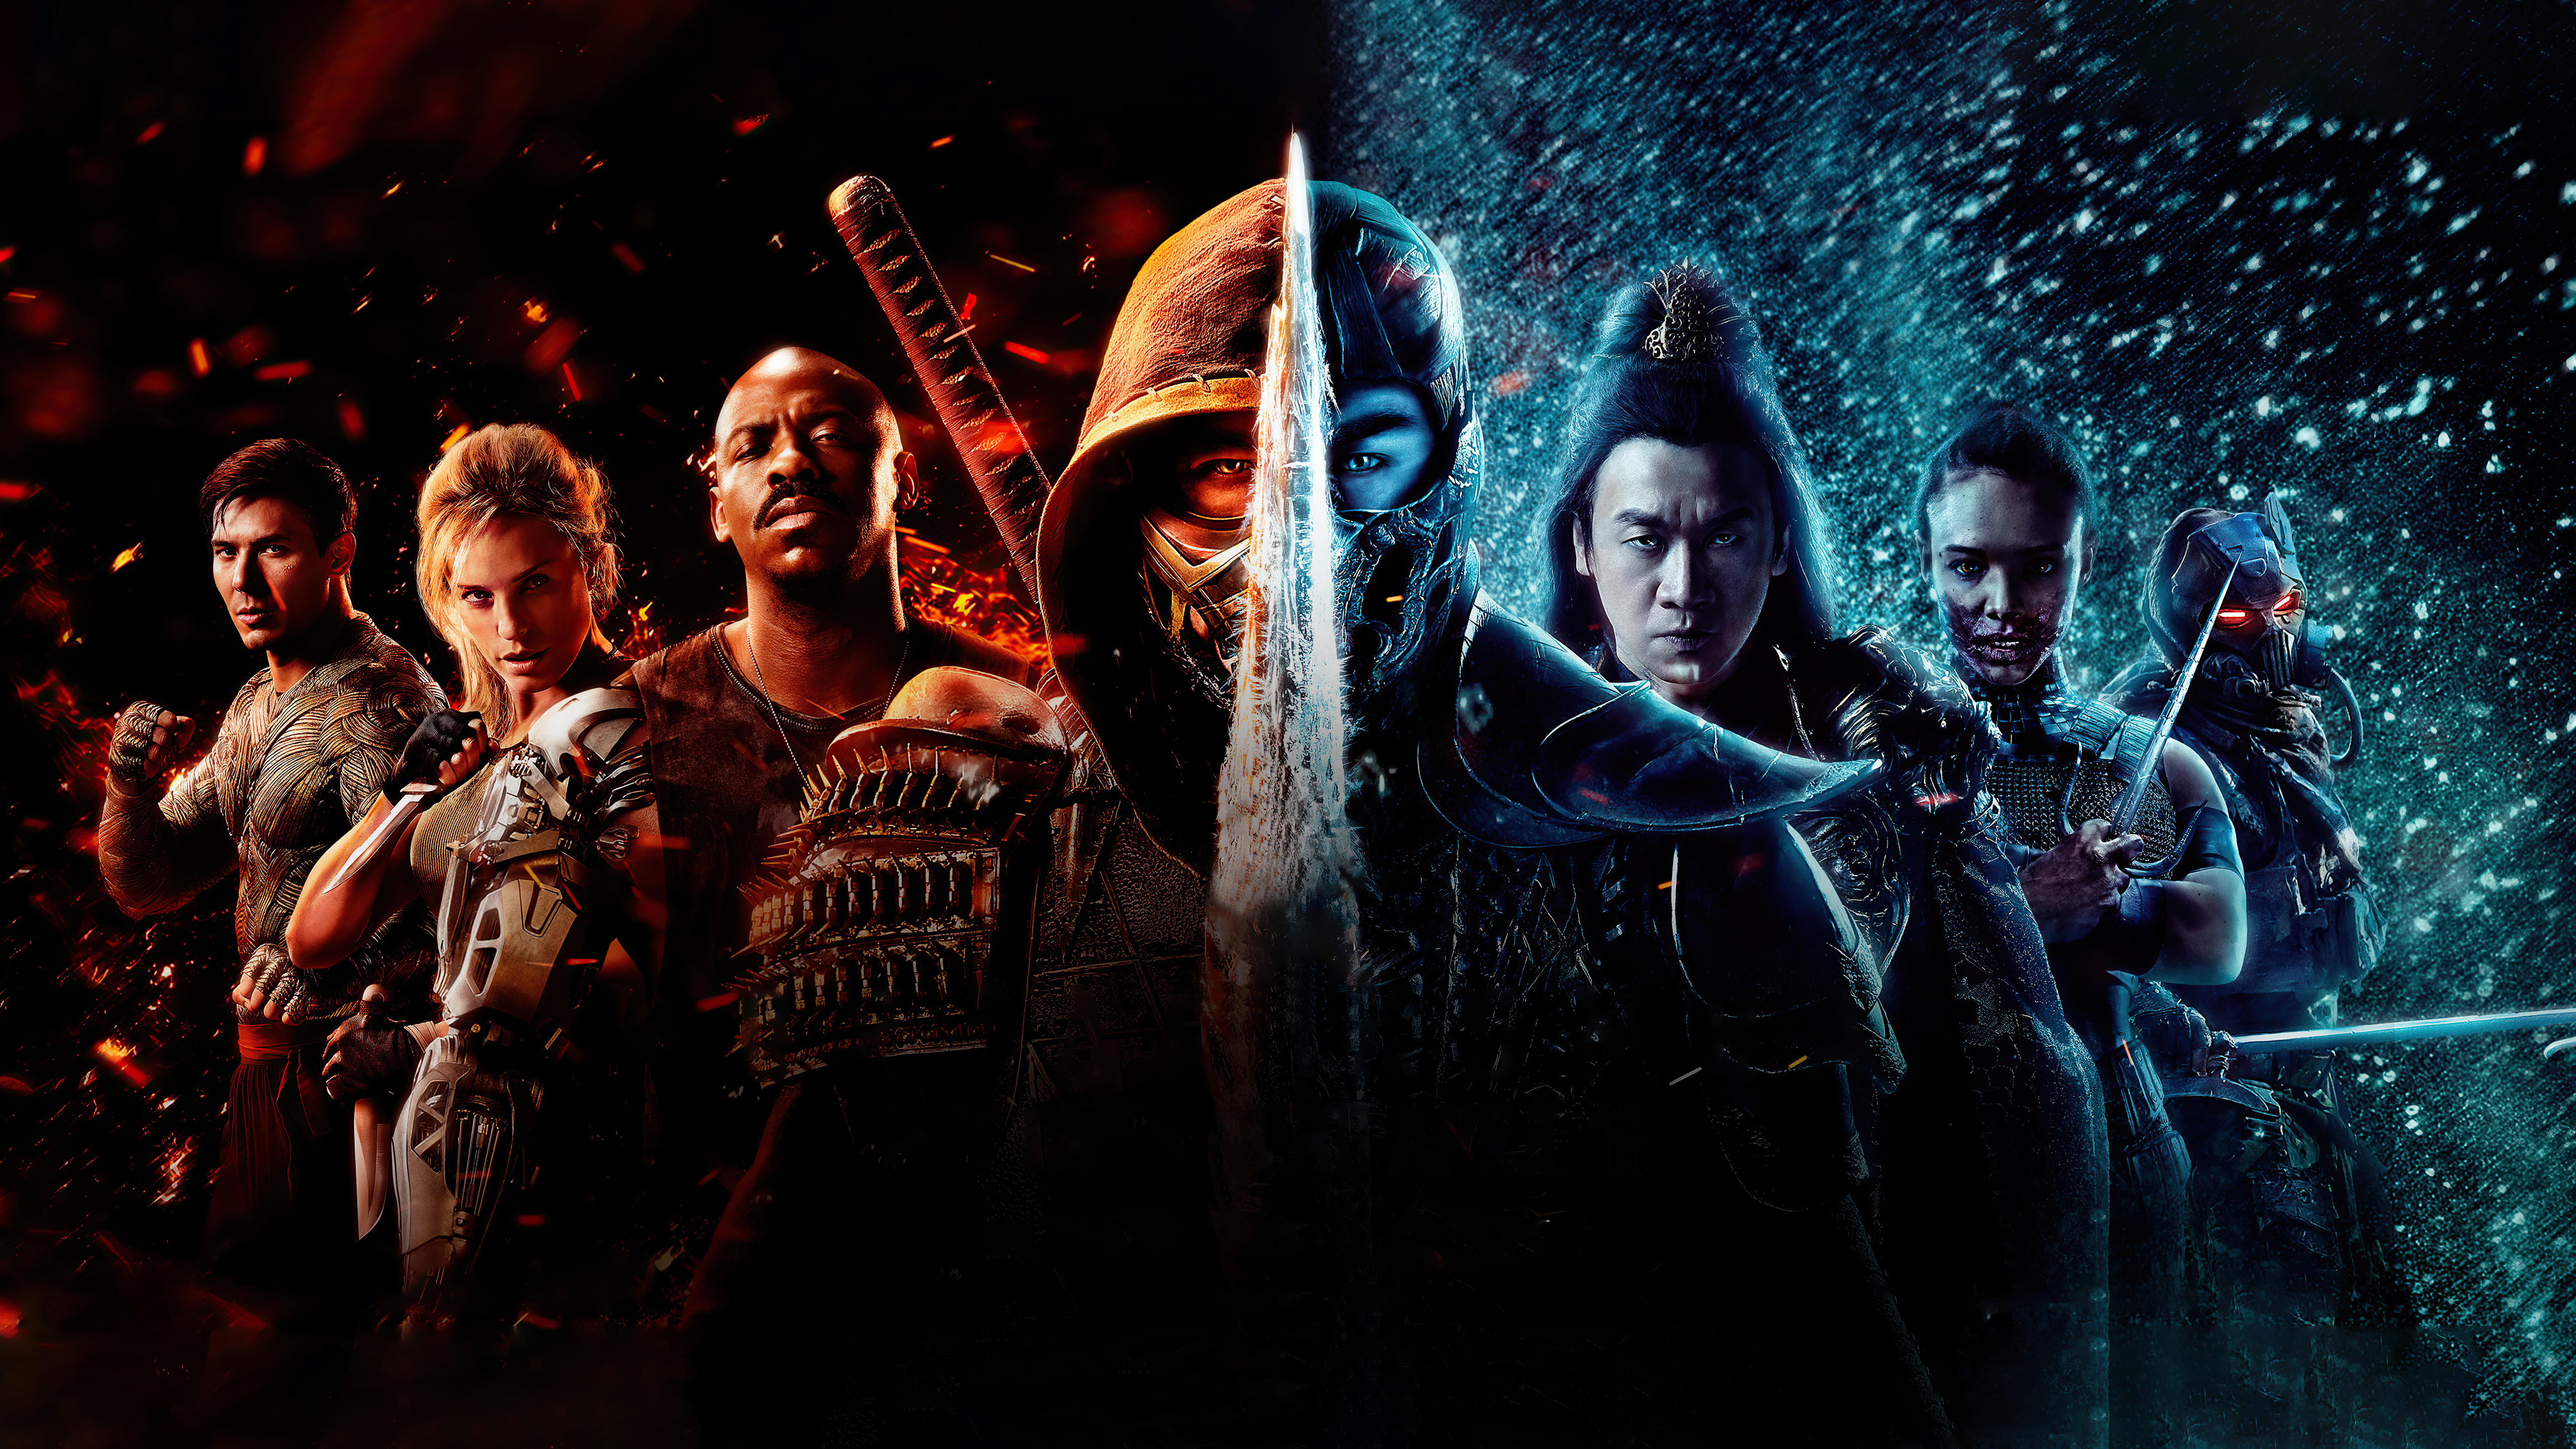 Sonya Blade Mortal Kombat Cosplay Wallpapers